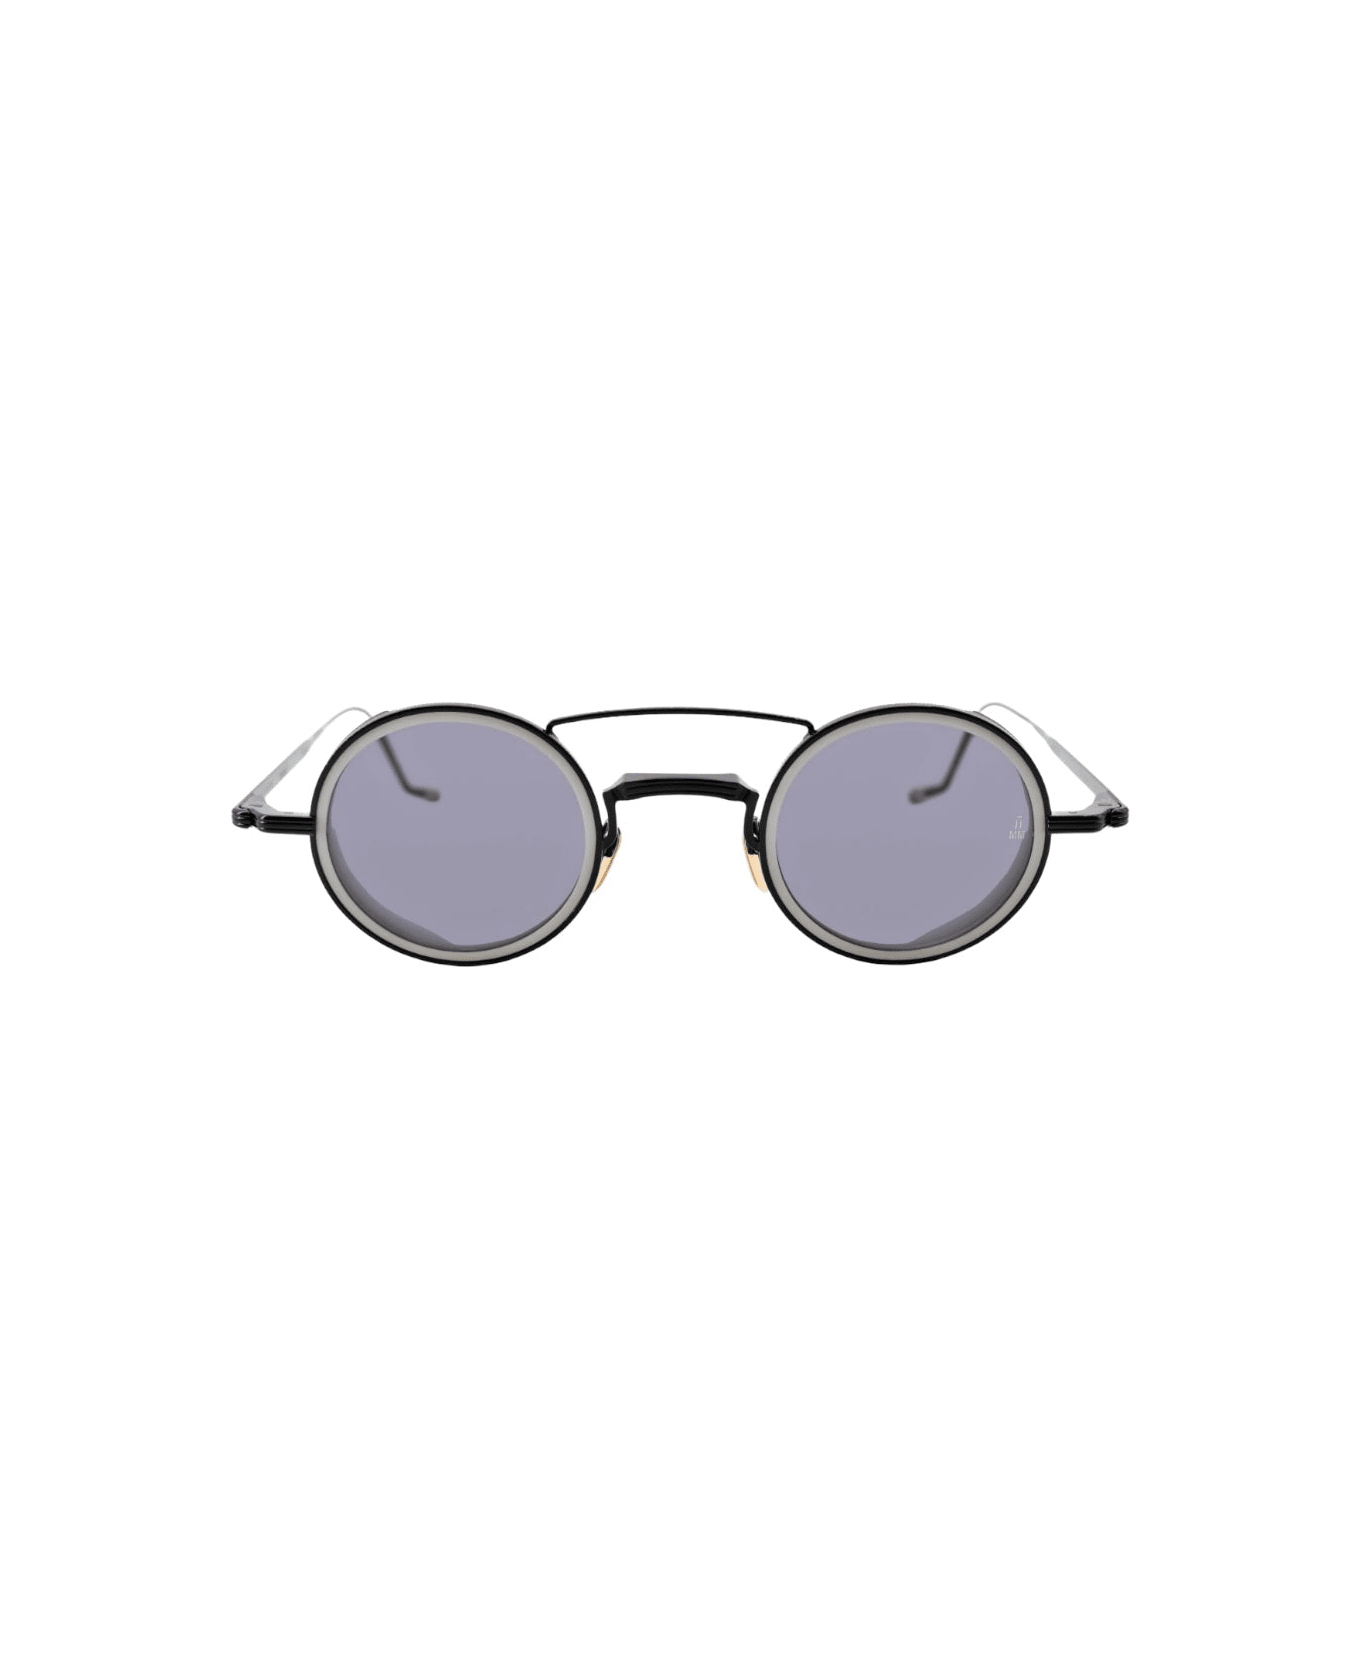 Jacques Marie Mage Ringo Sunglasses